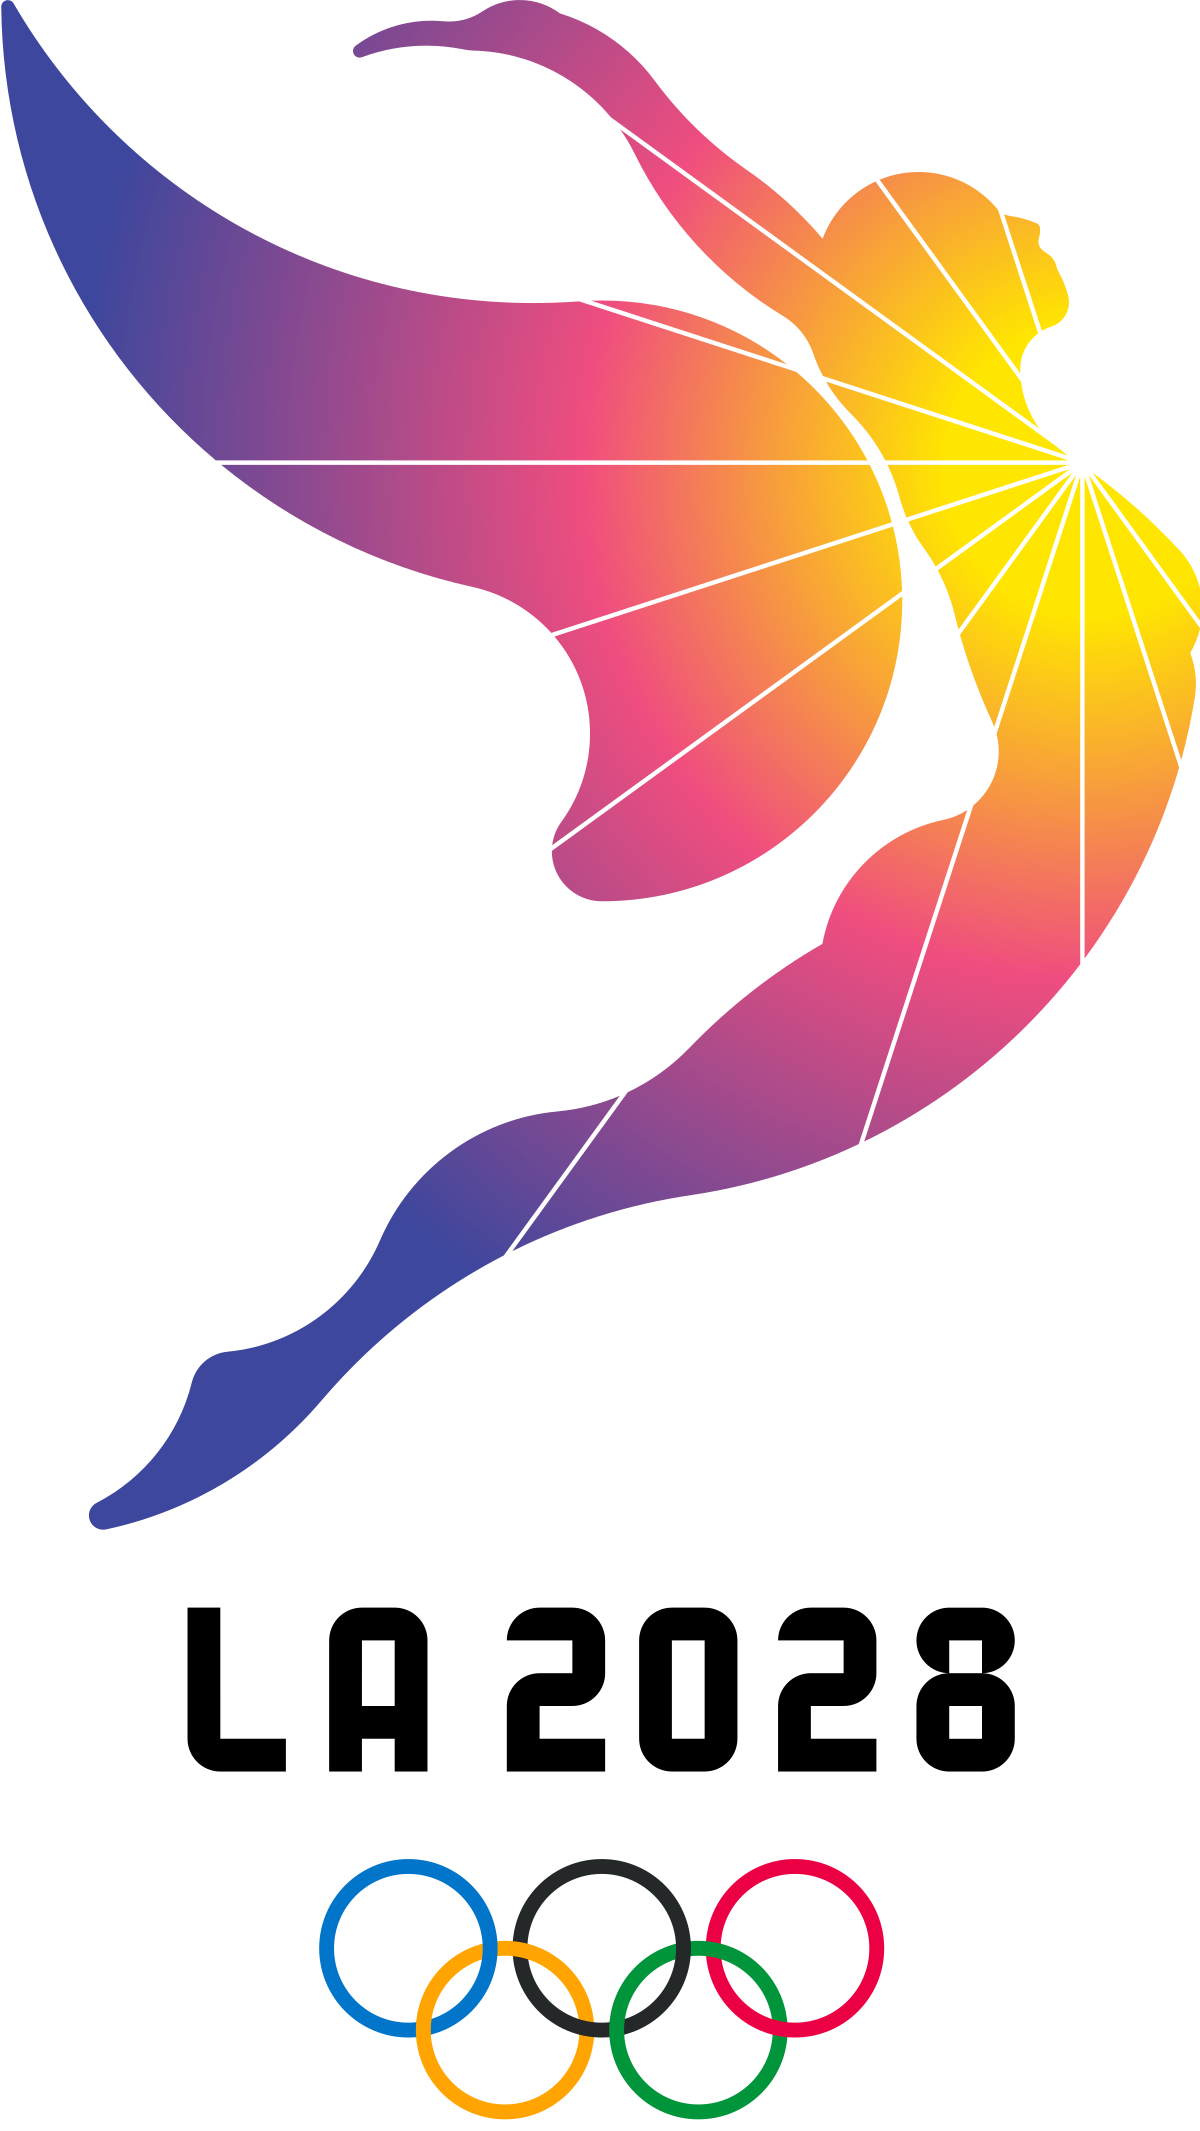 beijing 2022 winter olympics logo Beijing mascots cnipa IMAGE FLUENT